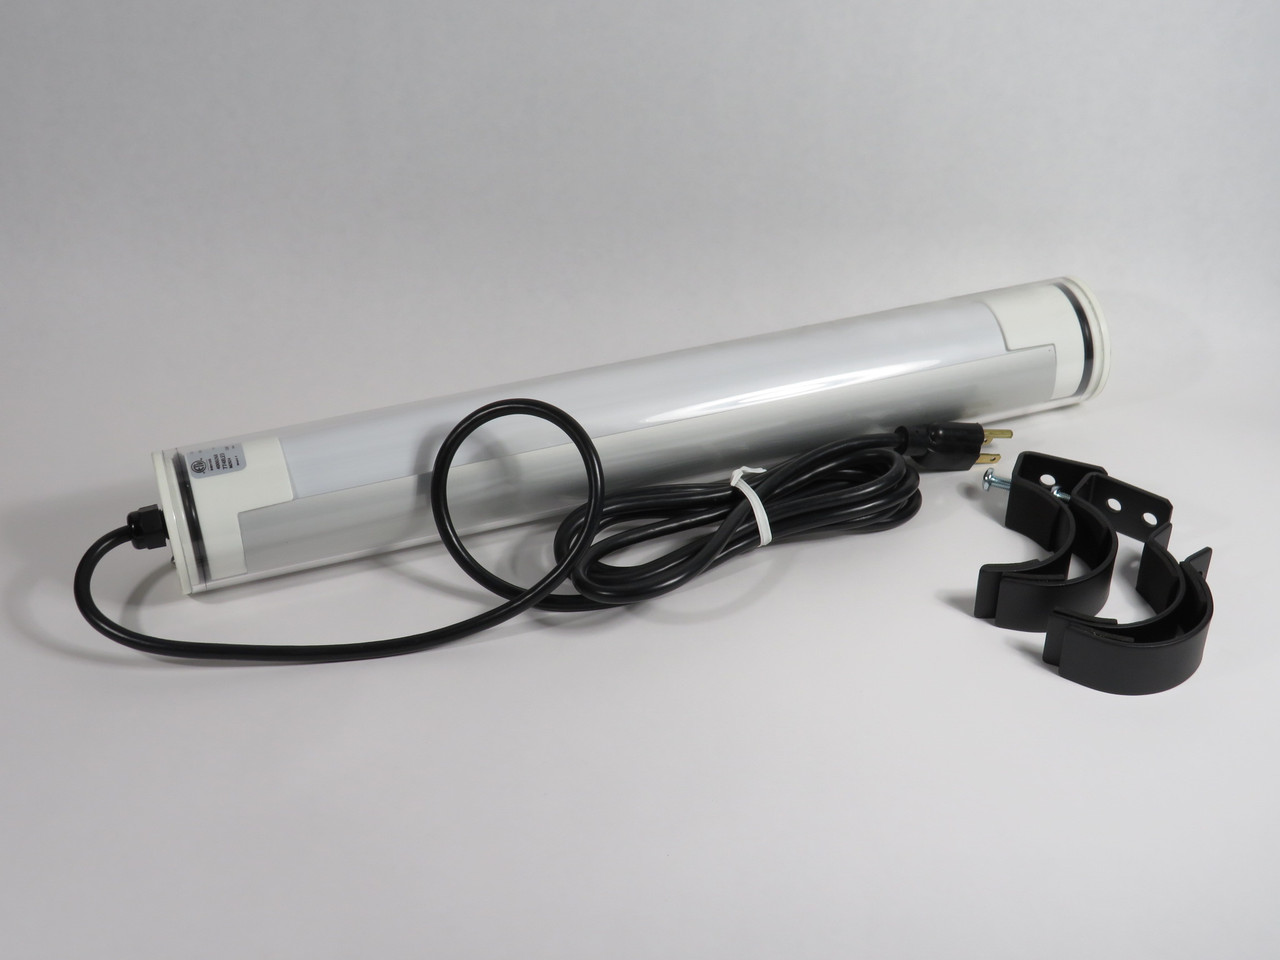 Electrix 7748LED Compact 20" LED Machine Tube Light 120V 7W SHELF WEAR NEW